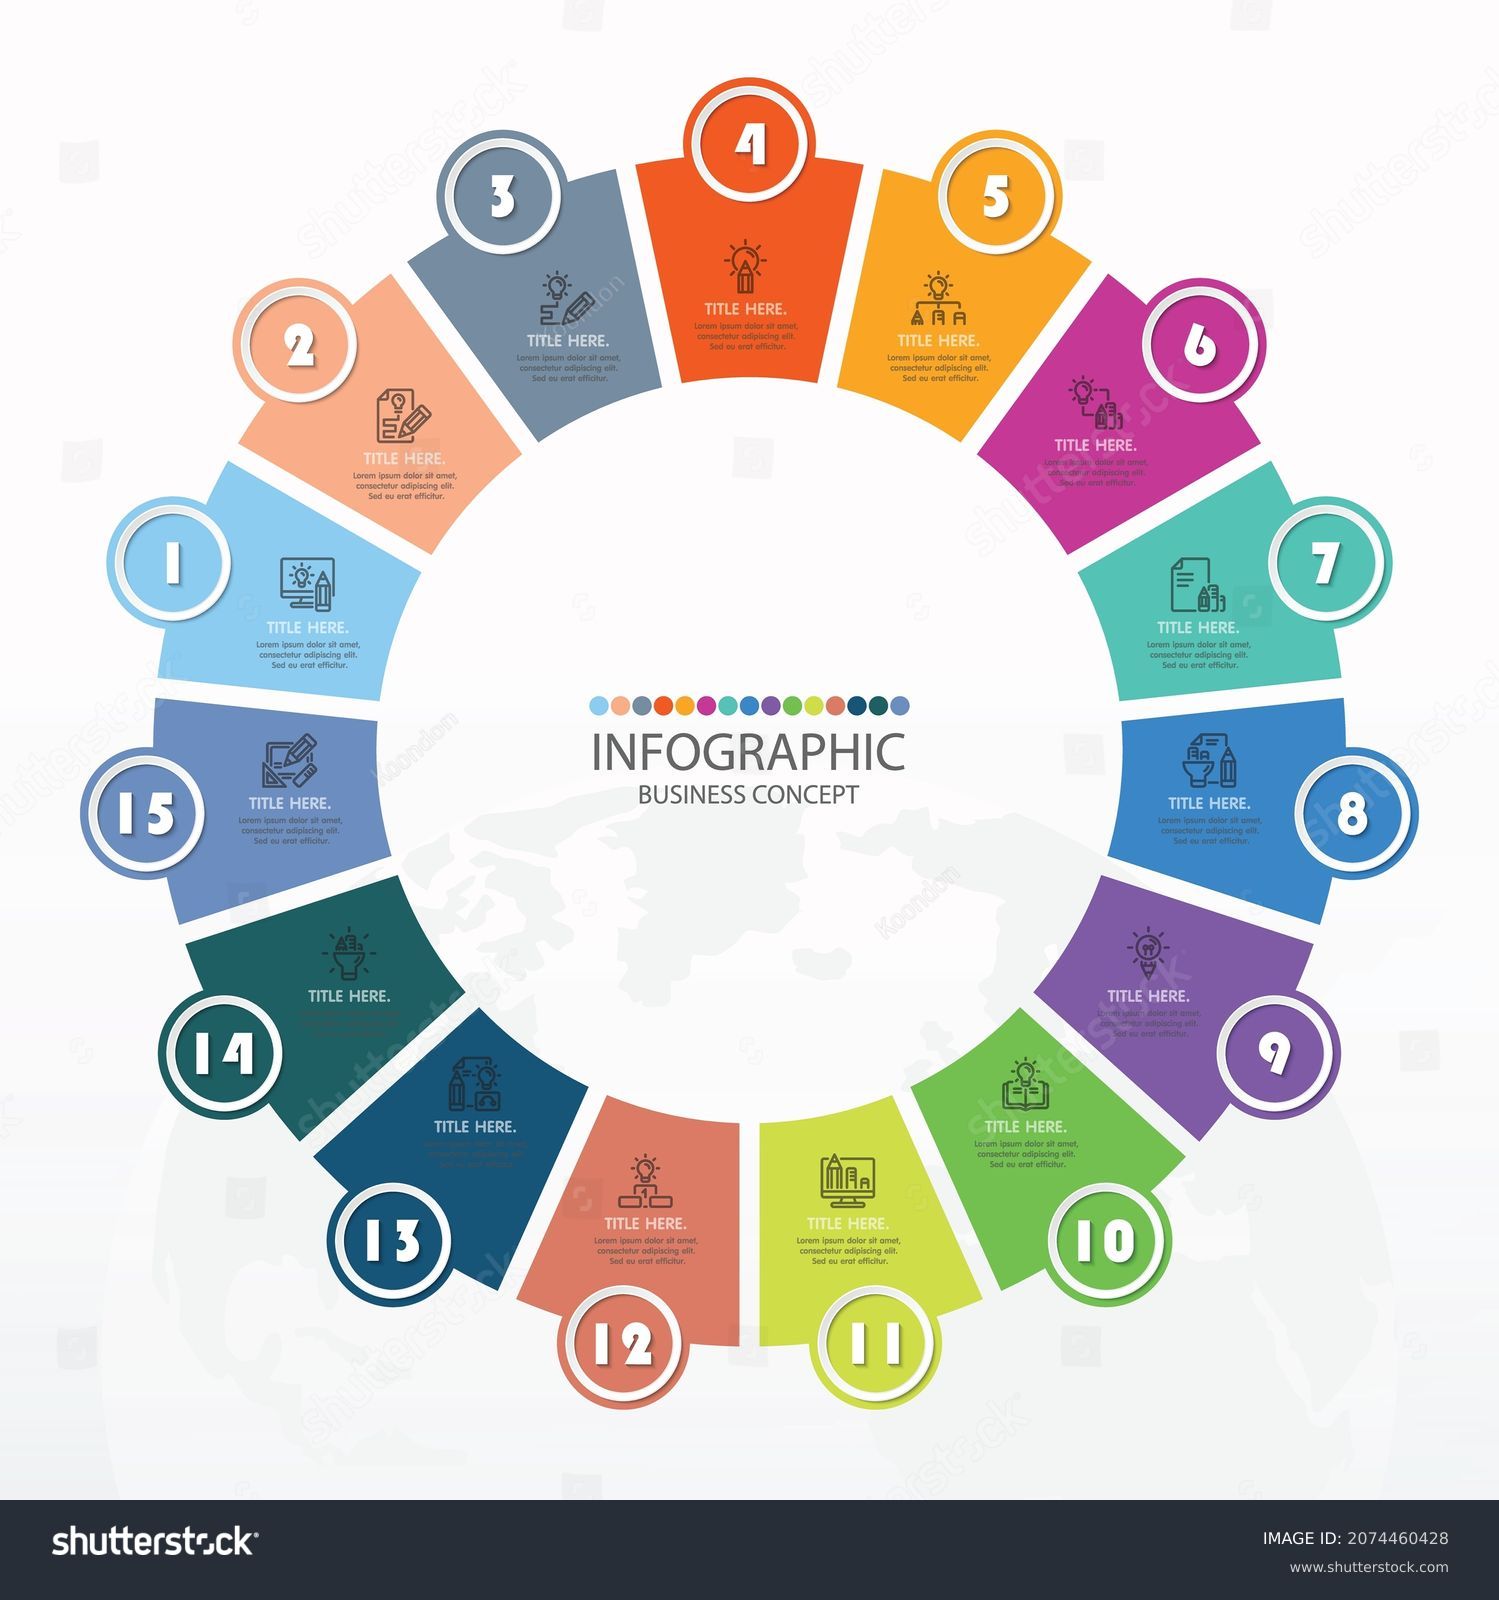 Basic Circle Infographic Template 15 Steps 库存矢量图（免版税）2074460428 Shutterstock 9441